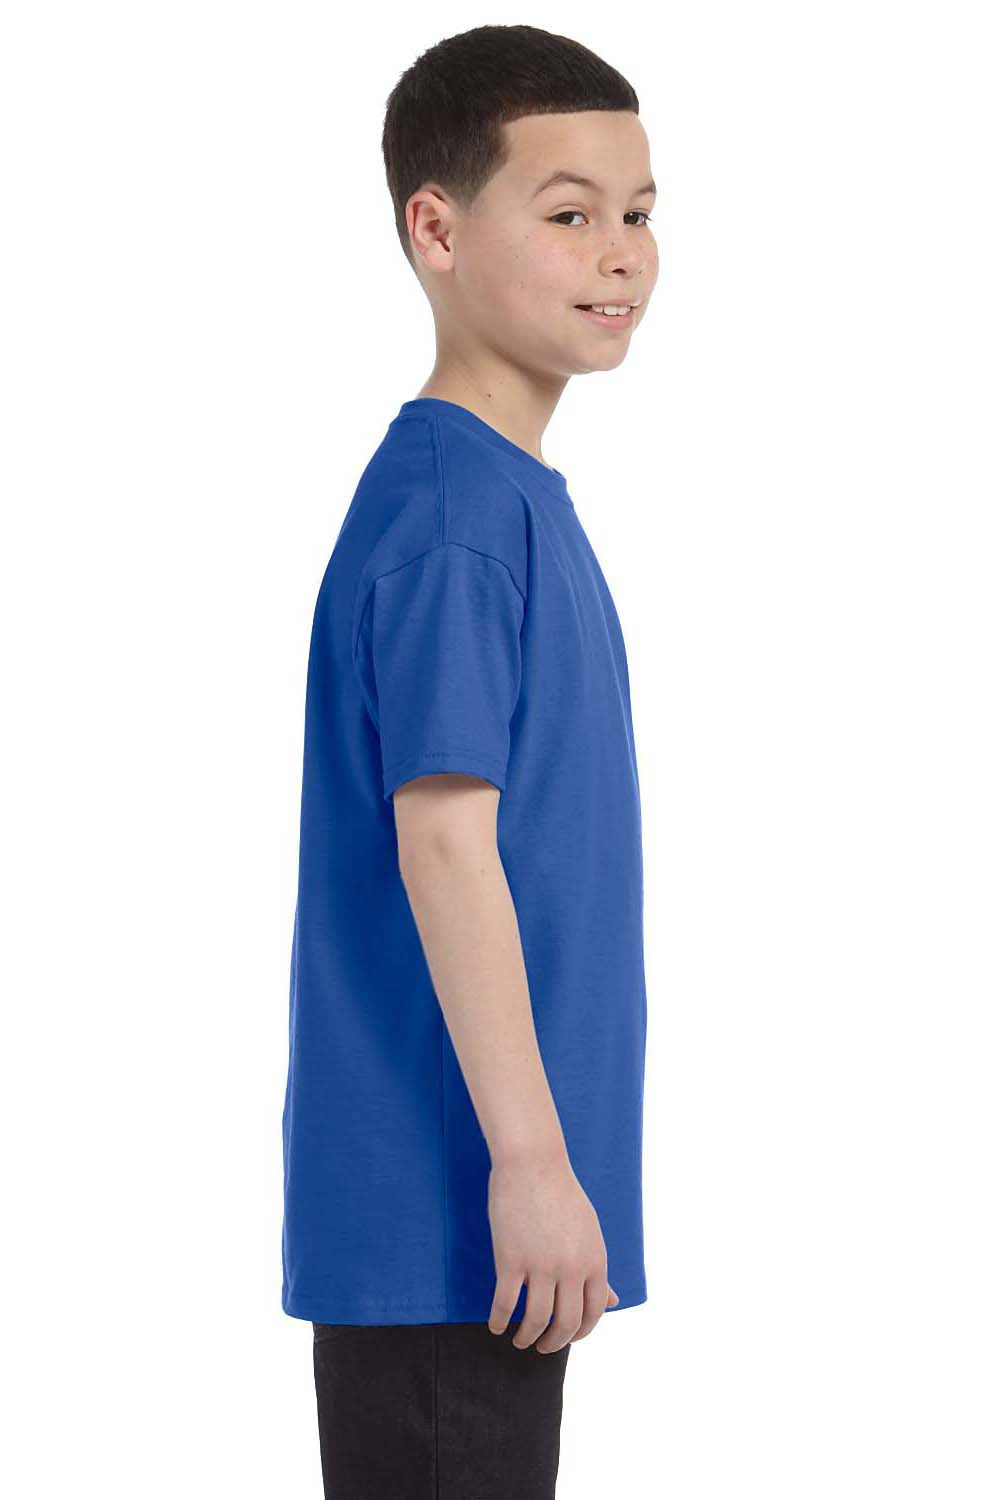 Jerzees 29B Youth Dri-Power Moisture Wicking Short Sleeve Crewneck T-Shirt Royal Blue Side